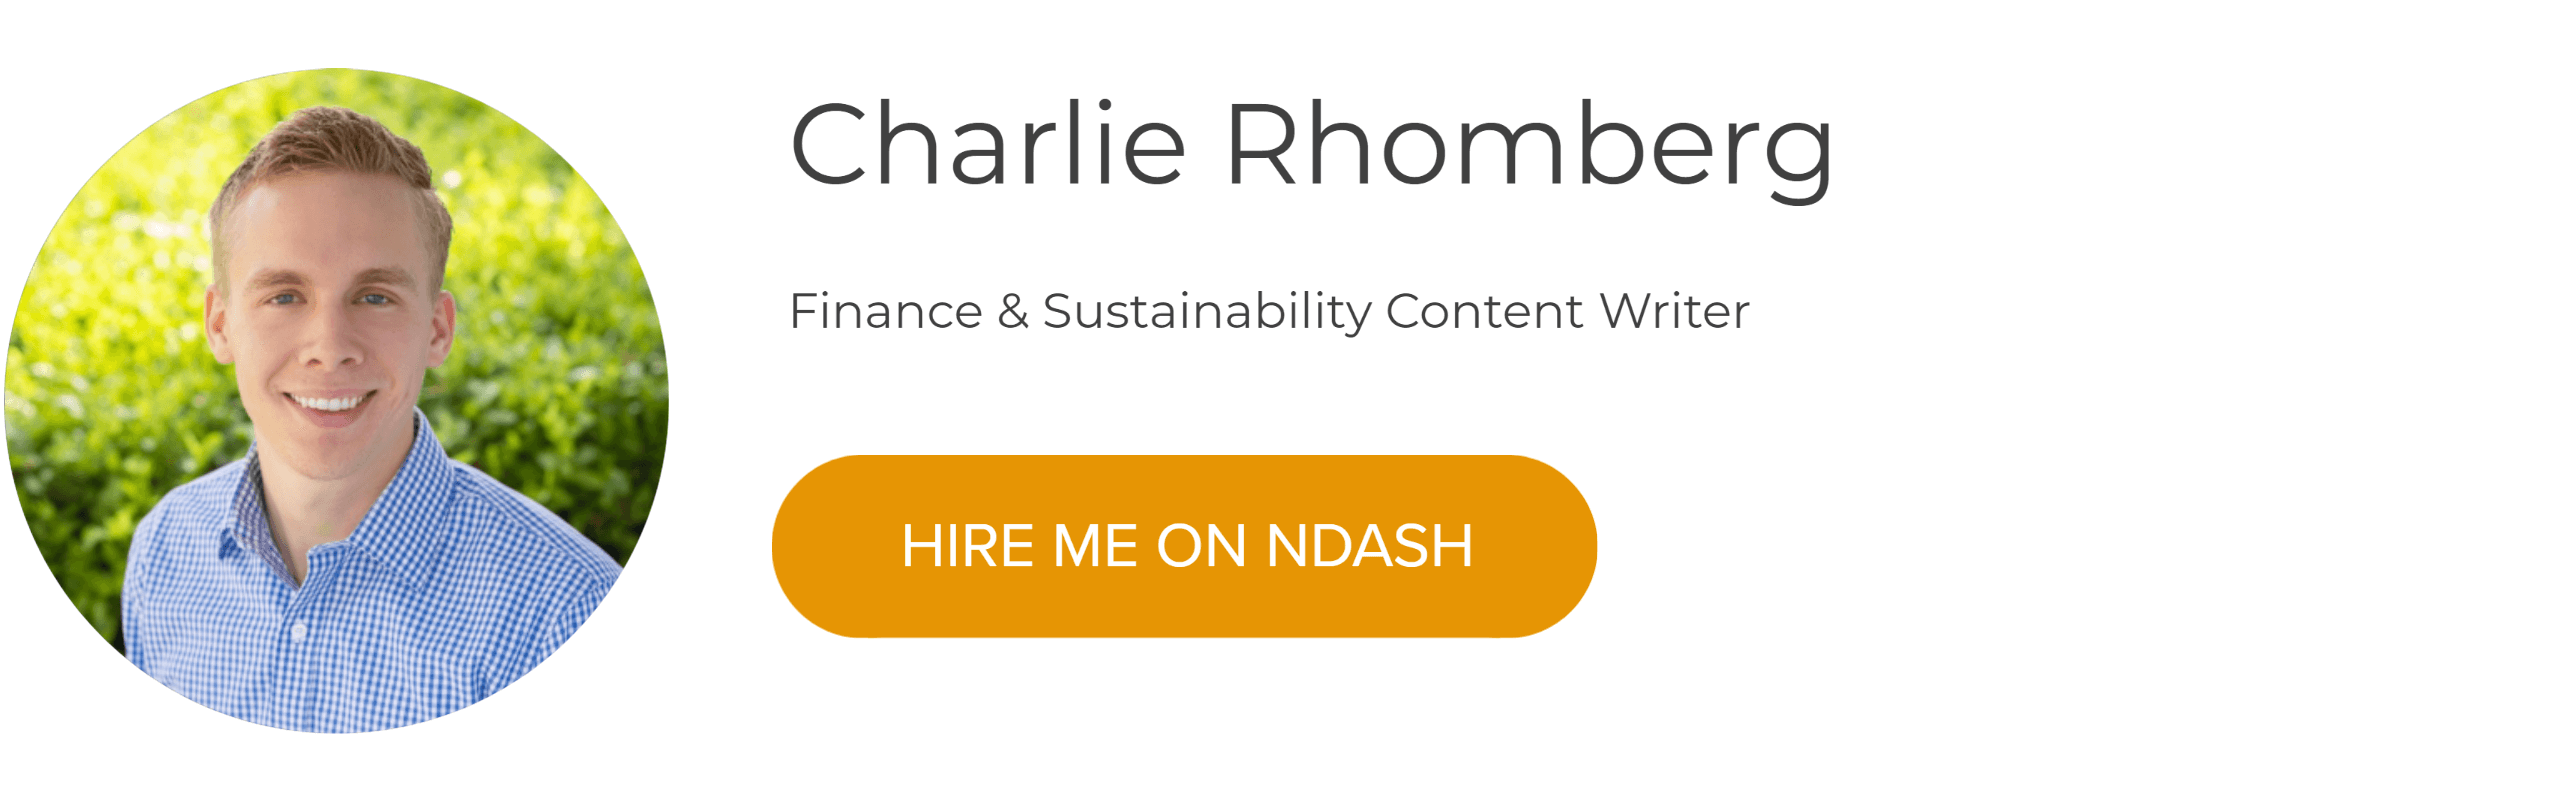 Charlie Rhomberg: Finance & Sustainability Freelance Writer